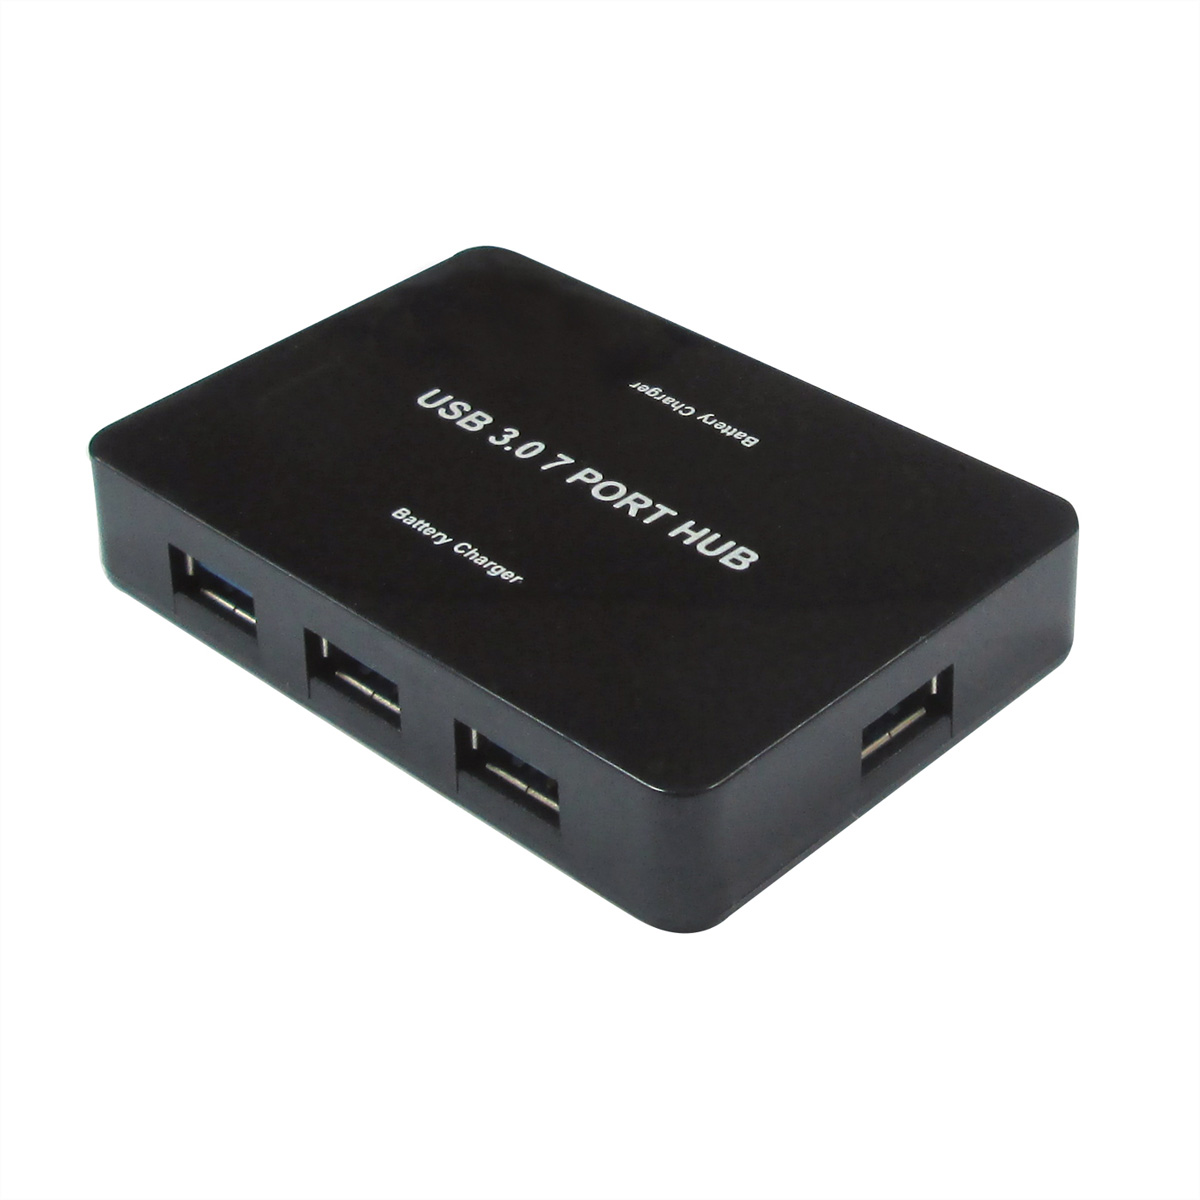 3.2 7 1 VALUE USB Gen Netzteil, USB Desktop Hub, mit Hub schwarz Ports,